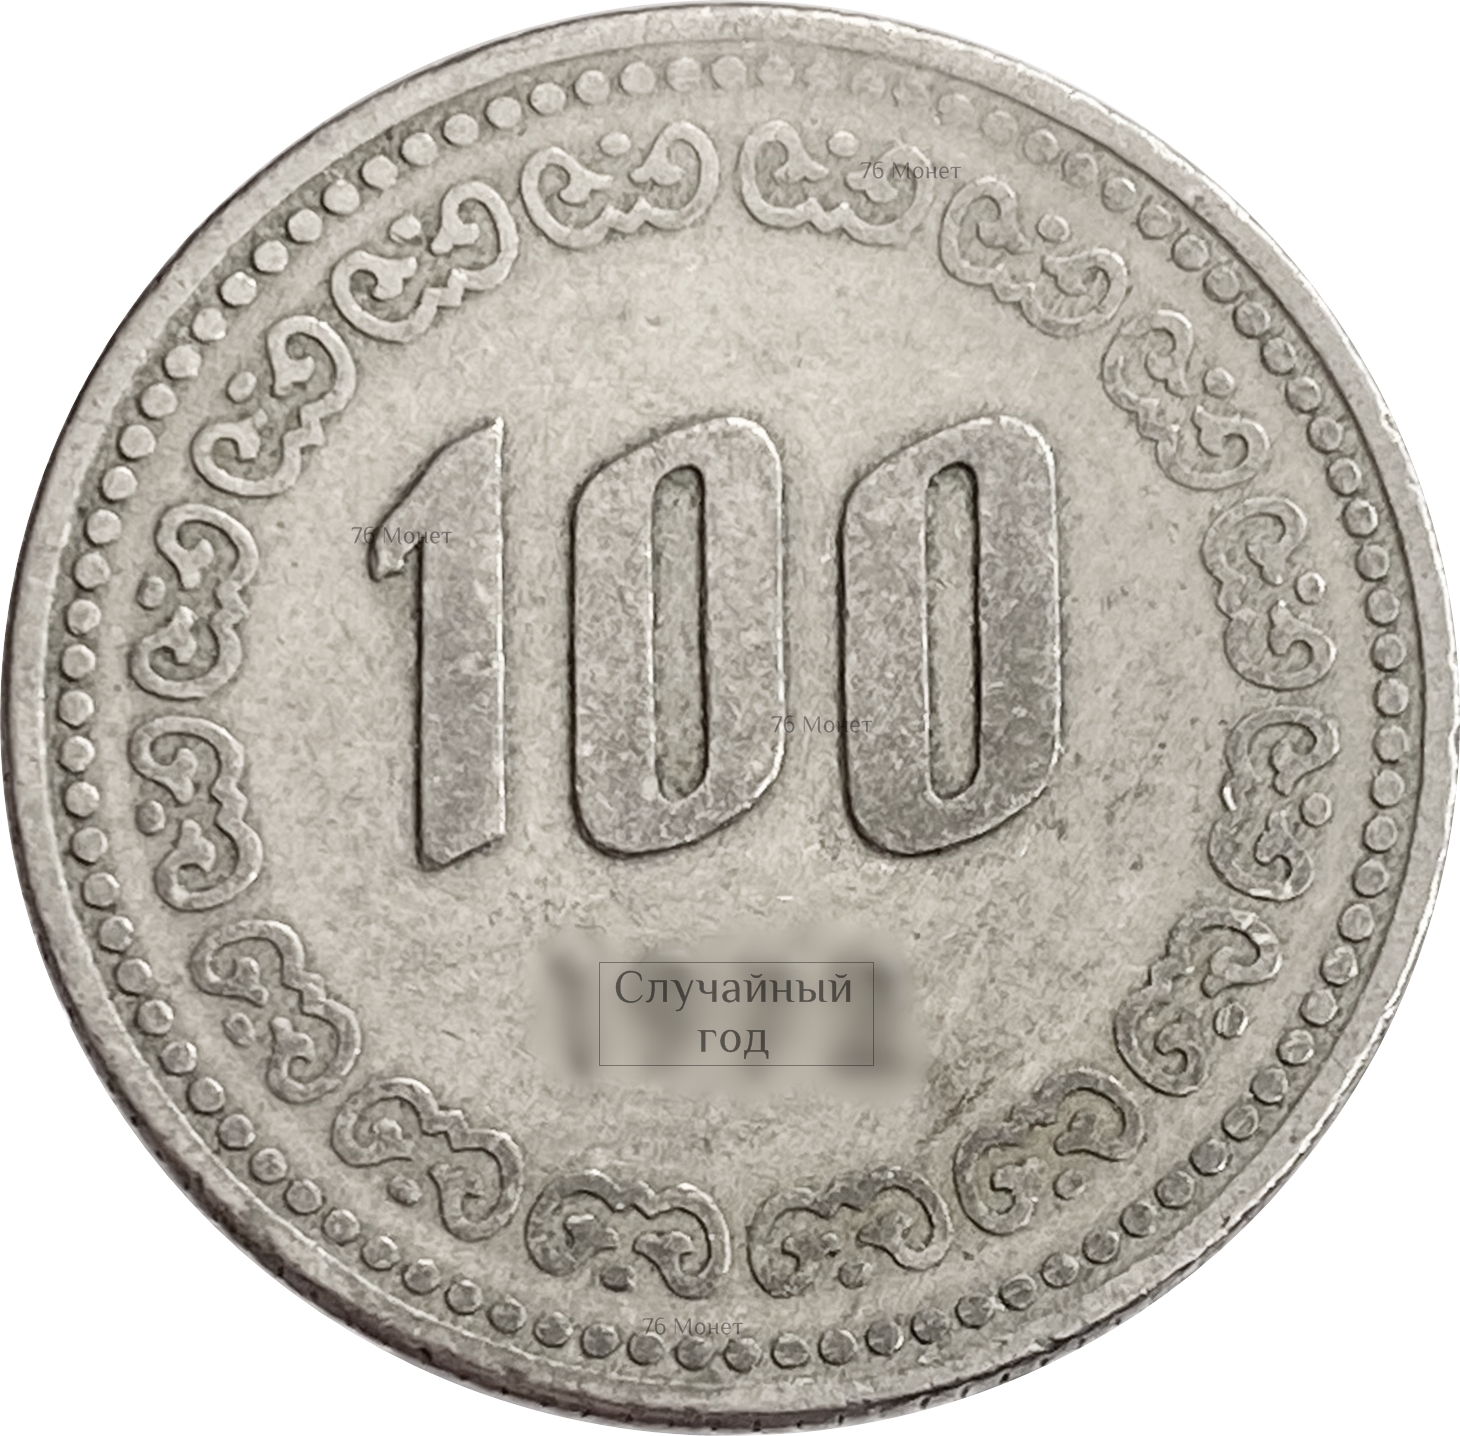 Корейская монета номинал 100 вон